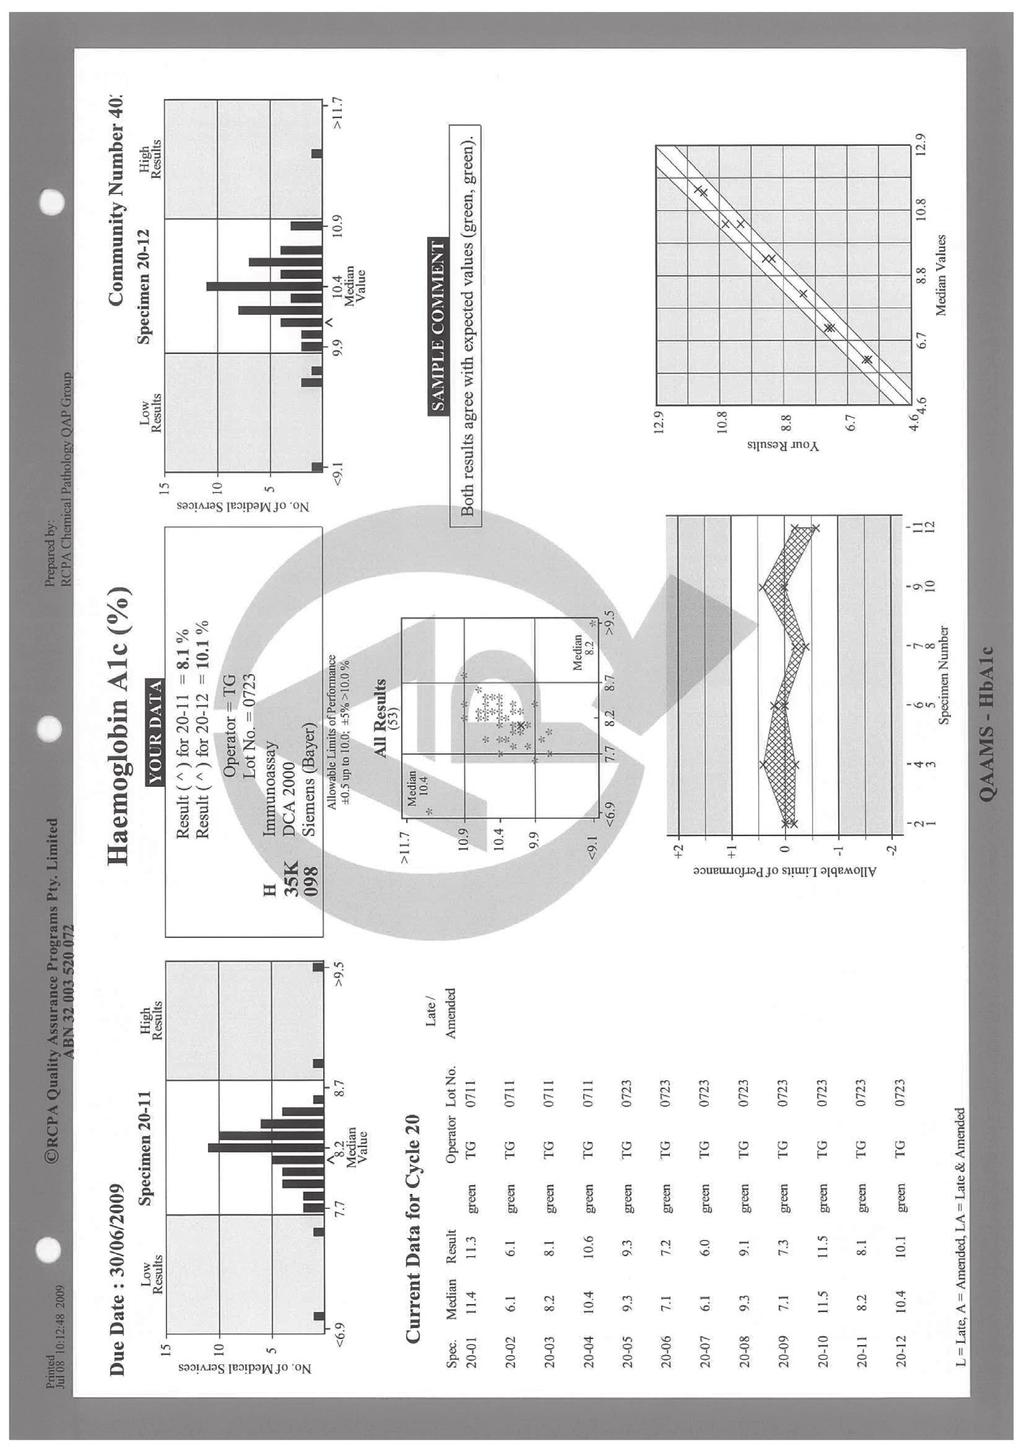 Shephard MDS & Gill JP Figure 2. Example of a QAAMS EQA report.